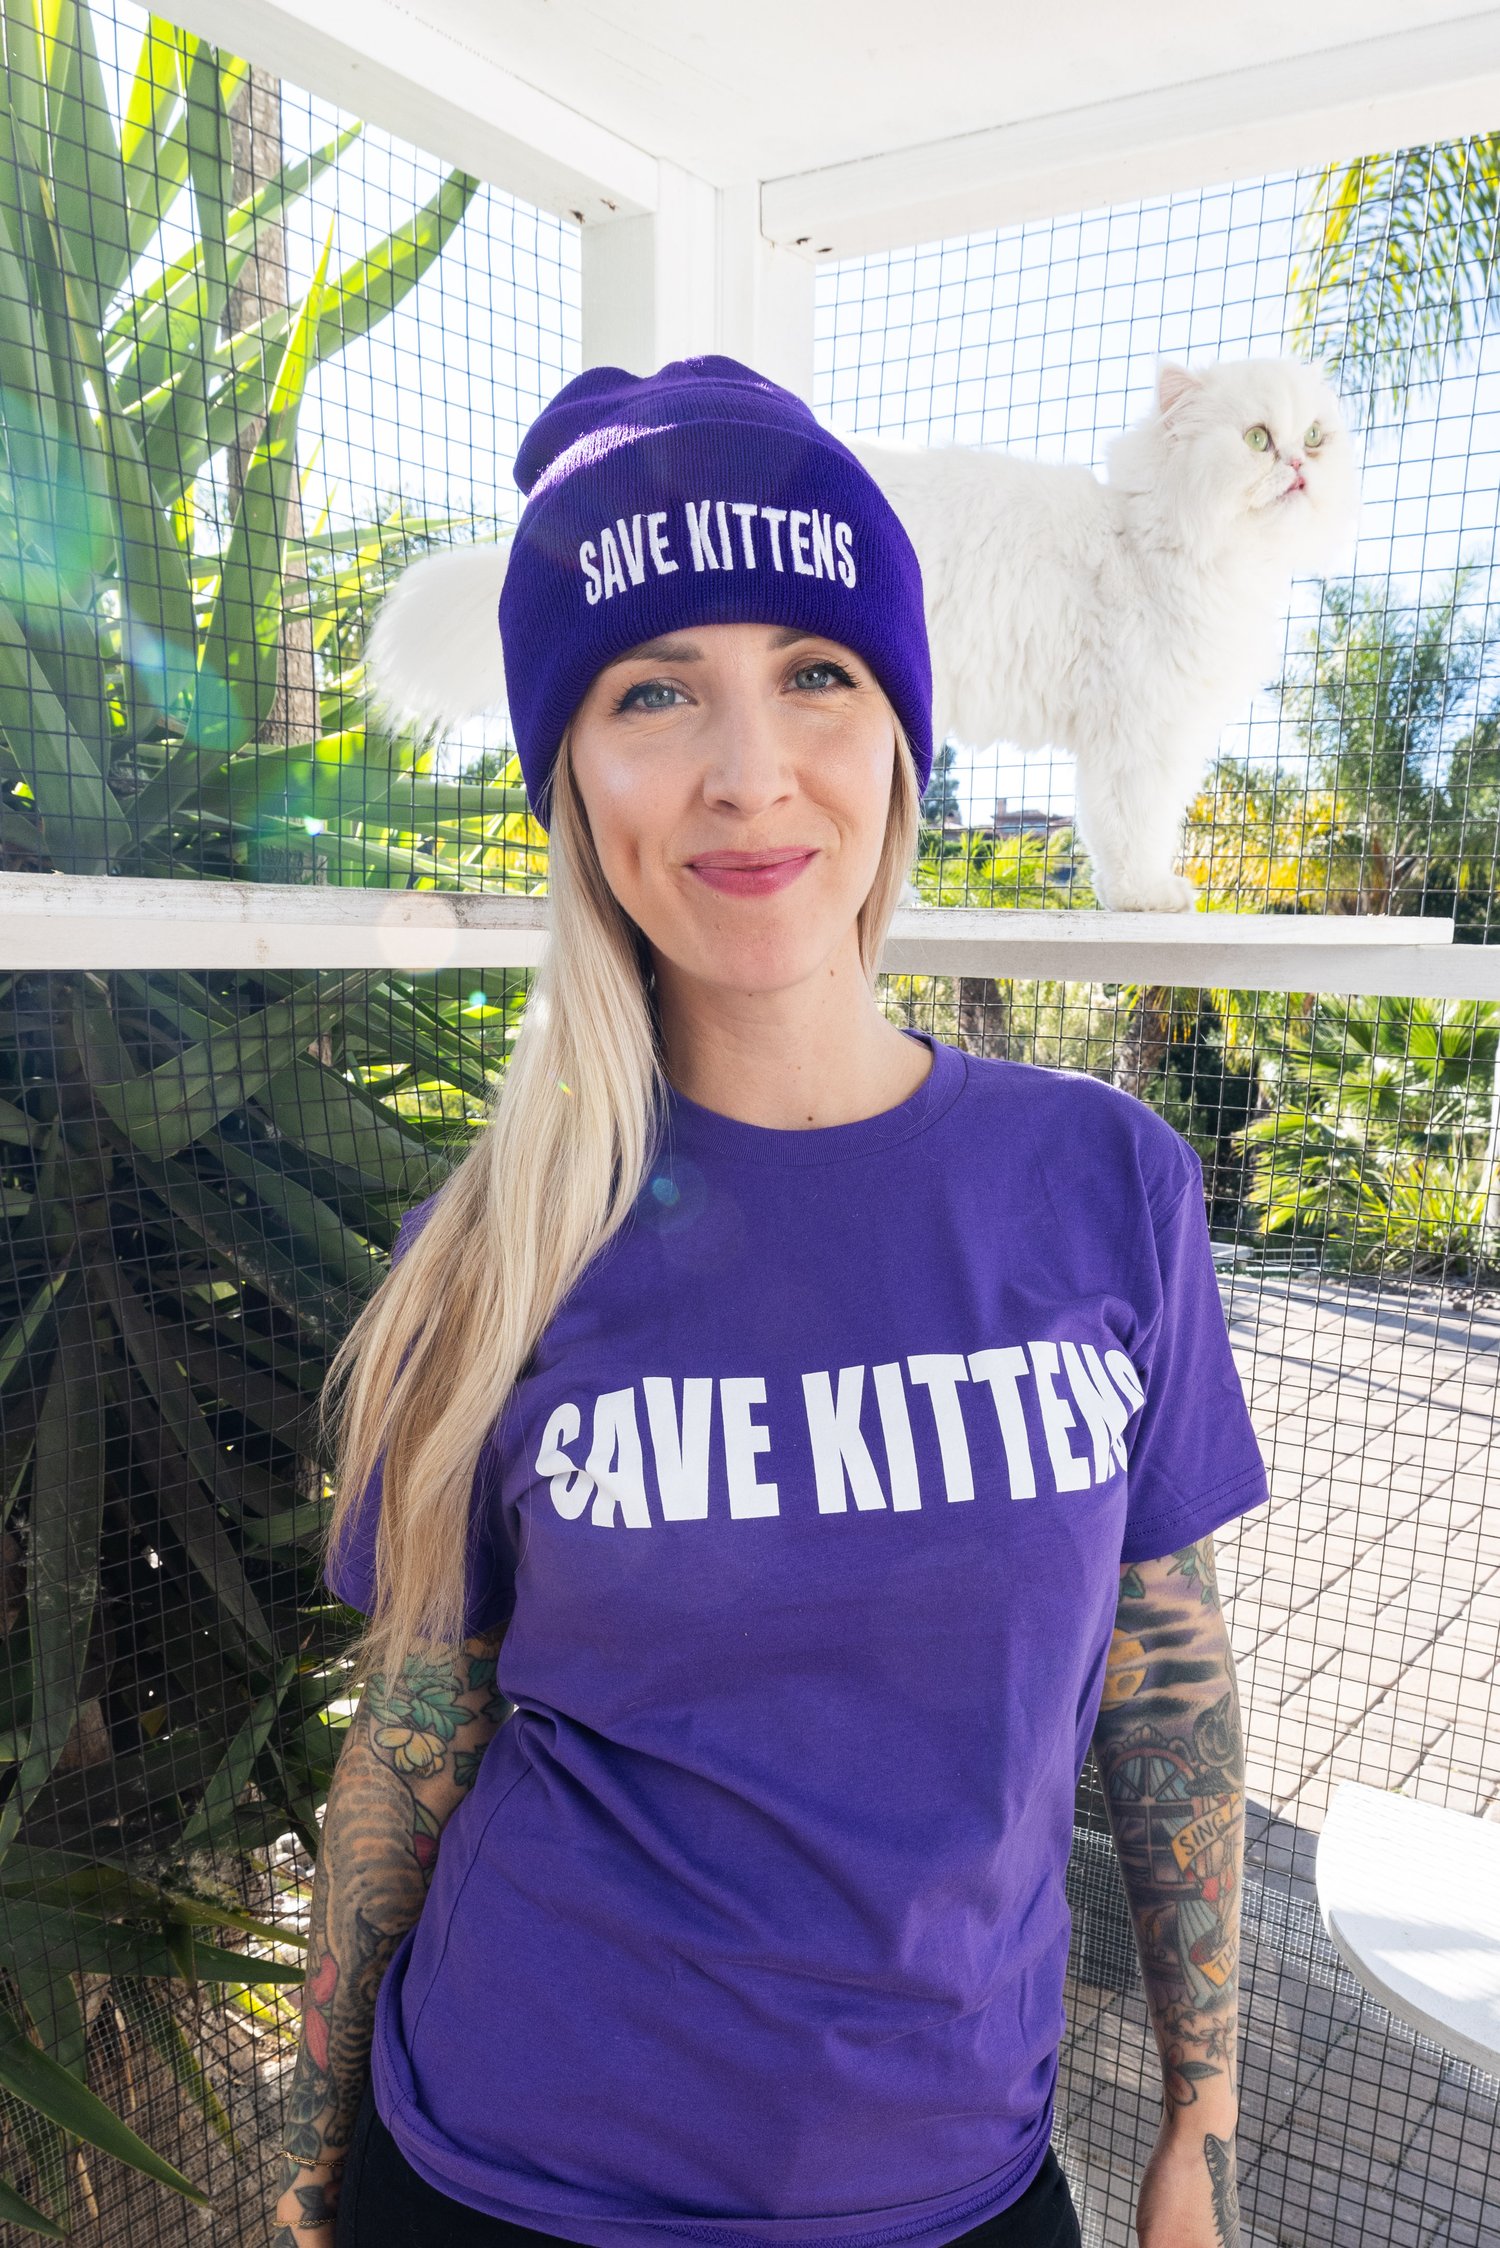 Image of Save Kittens beanie (purple)